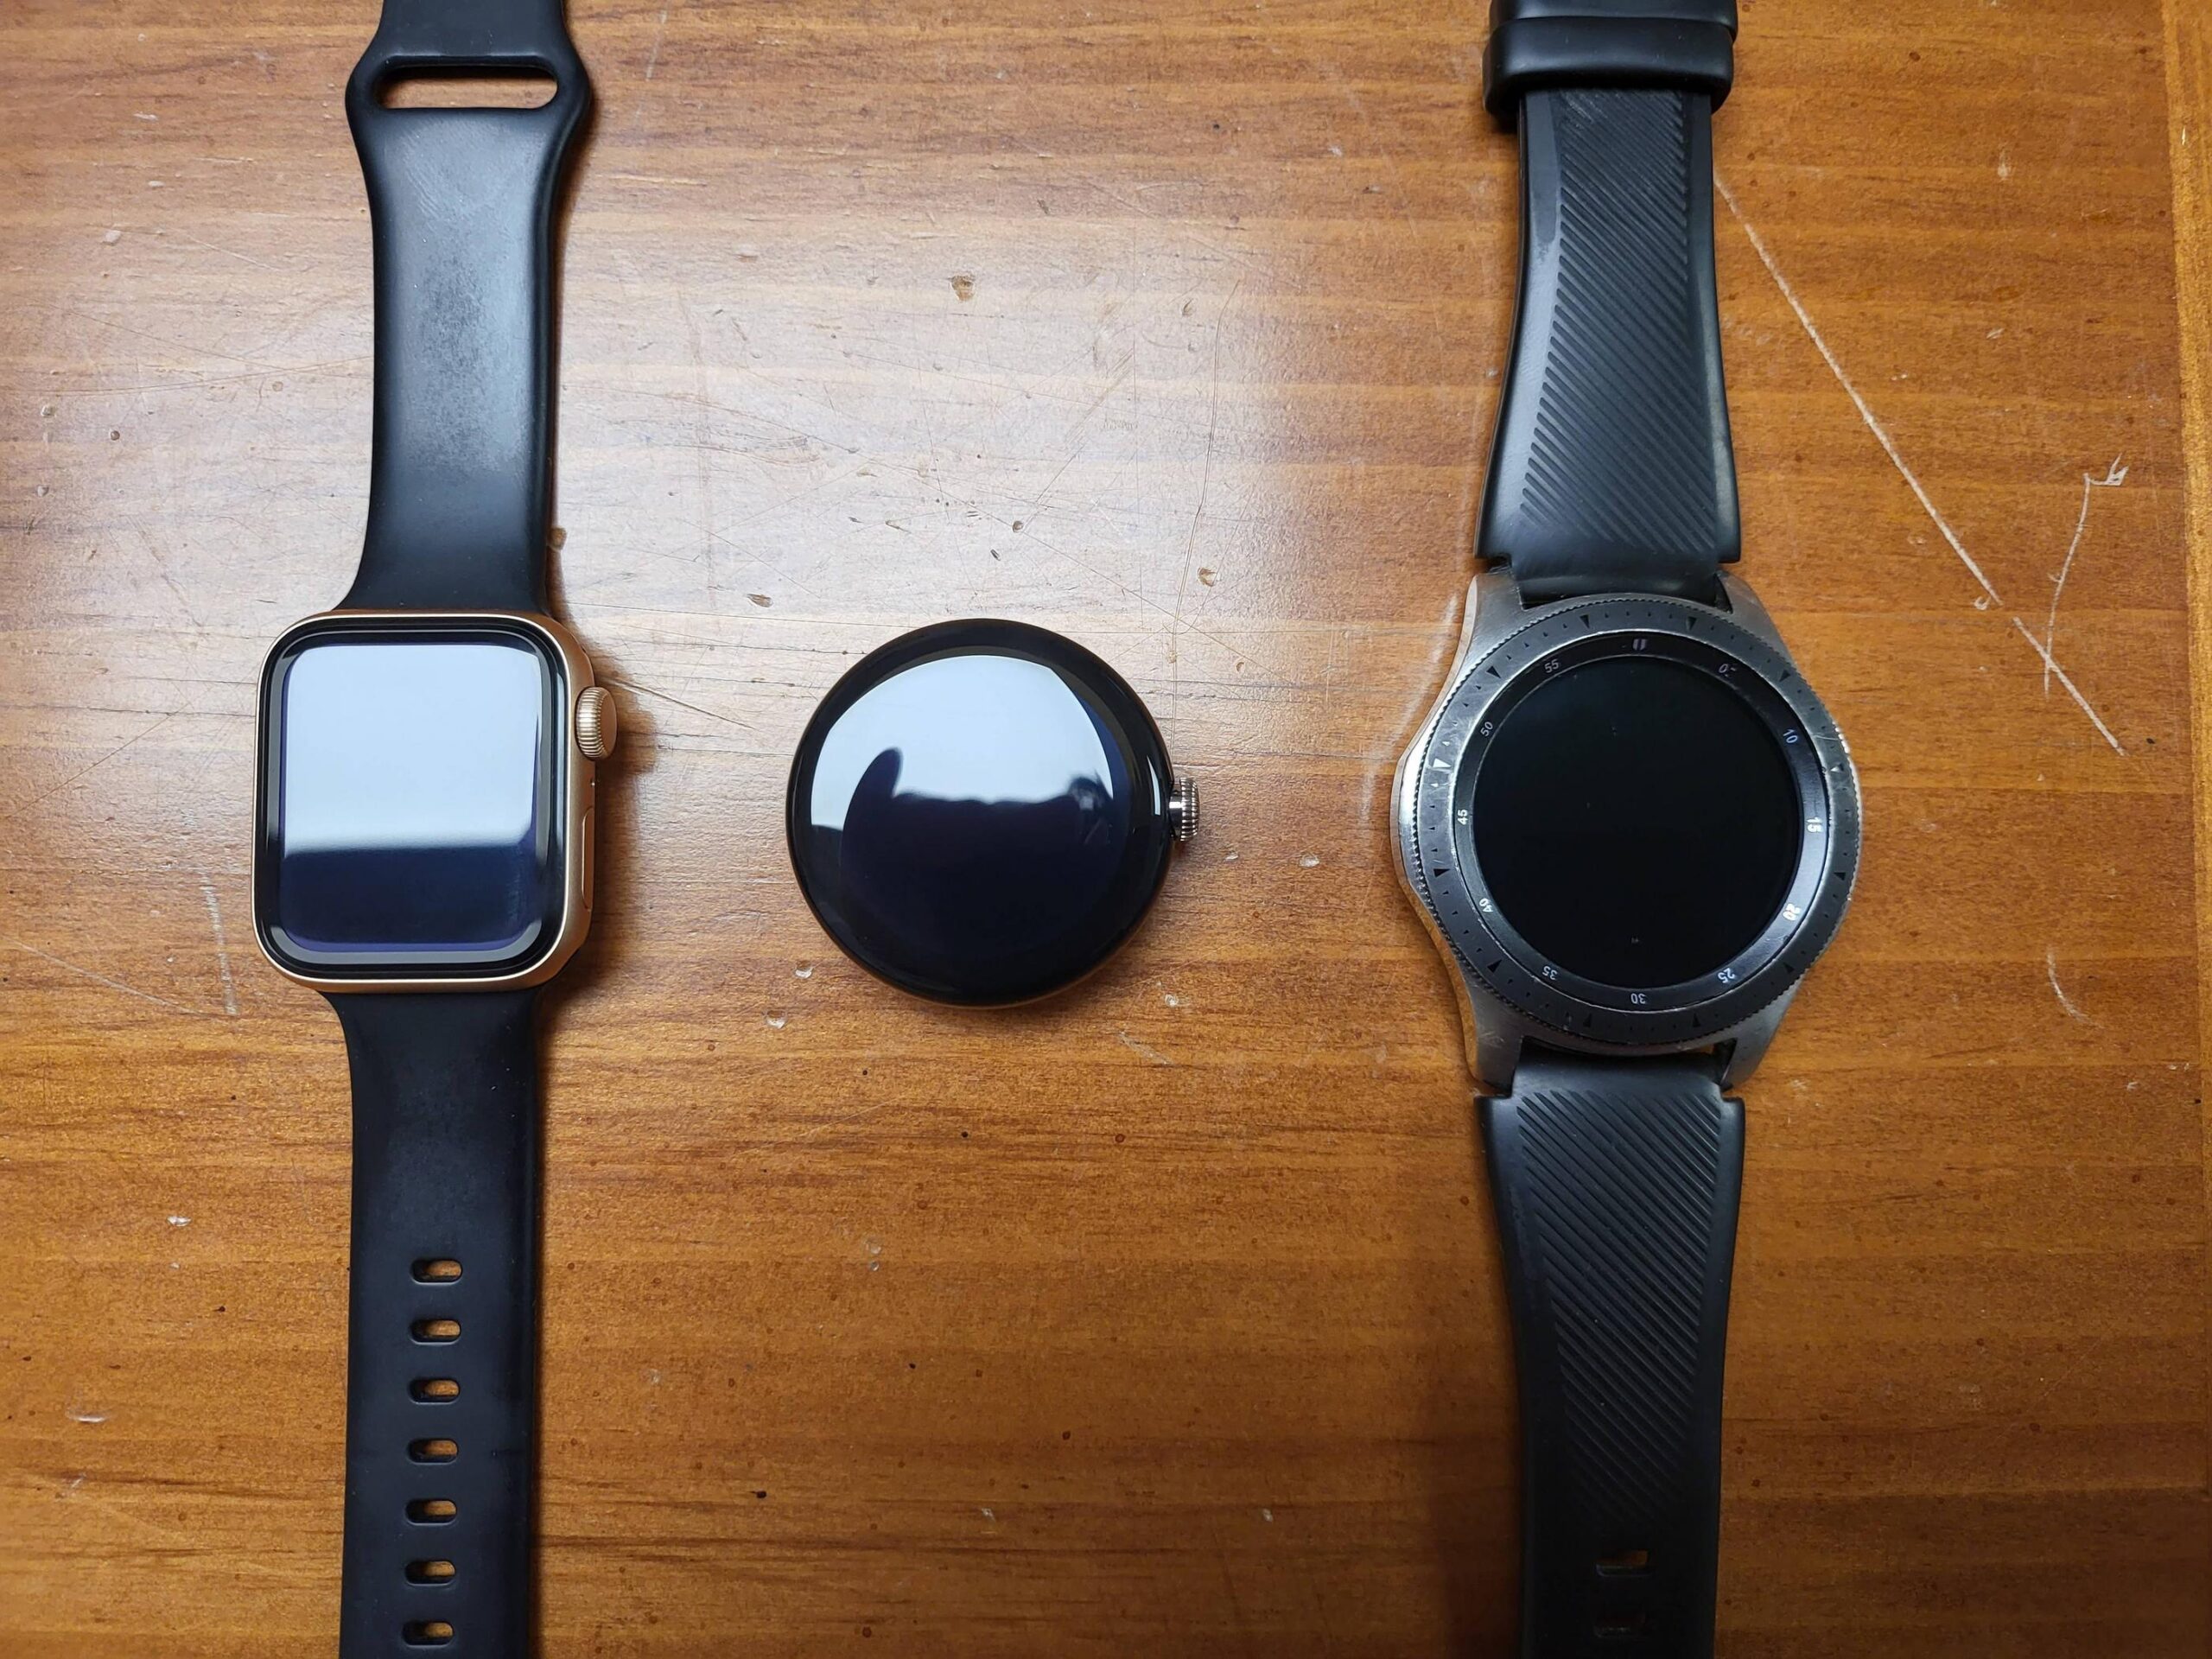 Google Pixel Watch: A prototype of Google's smart watch forgotten in a restaurant